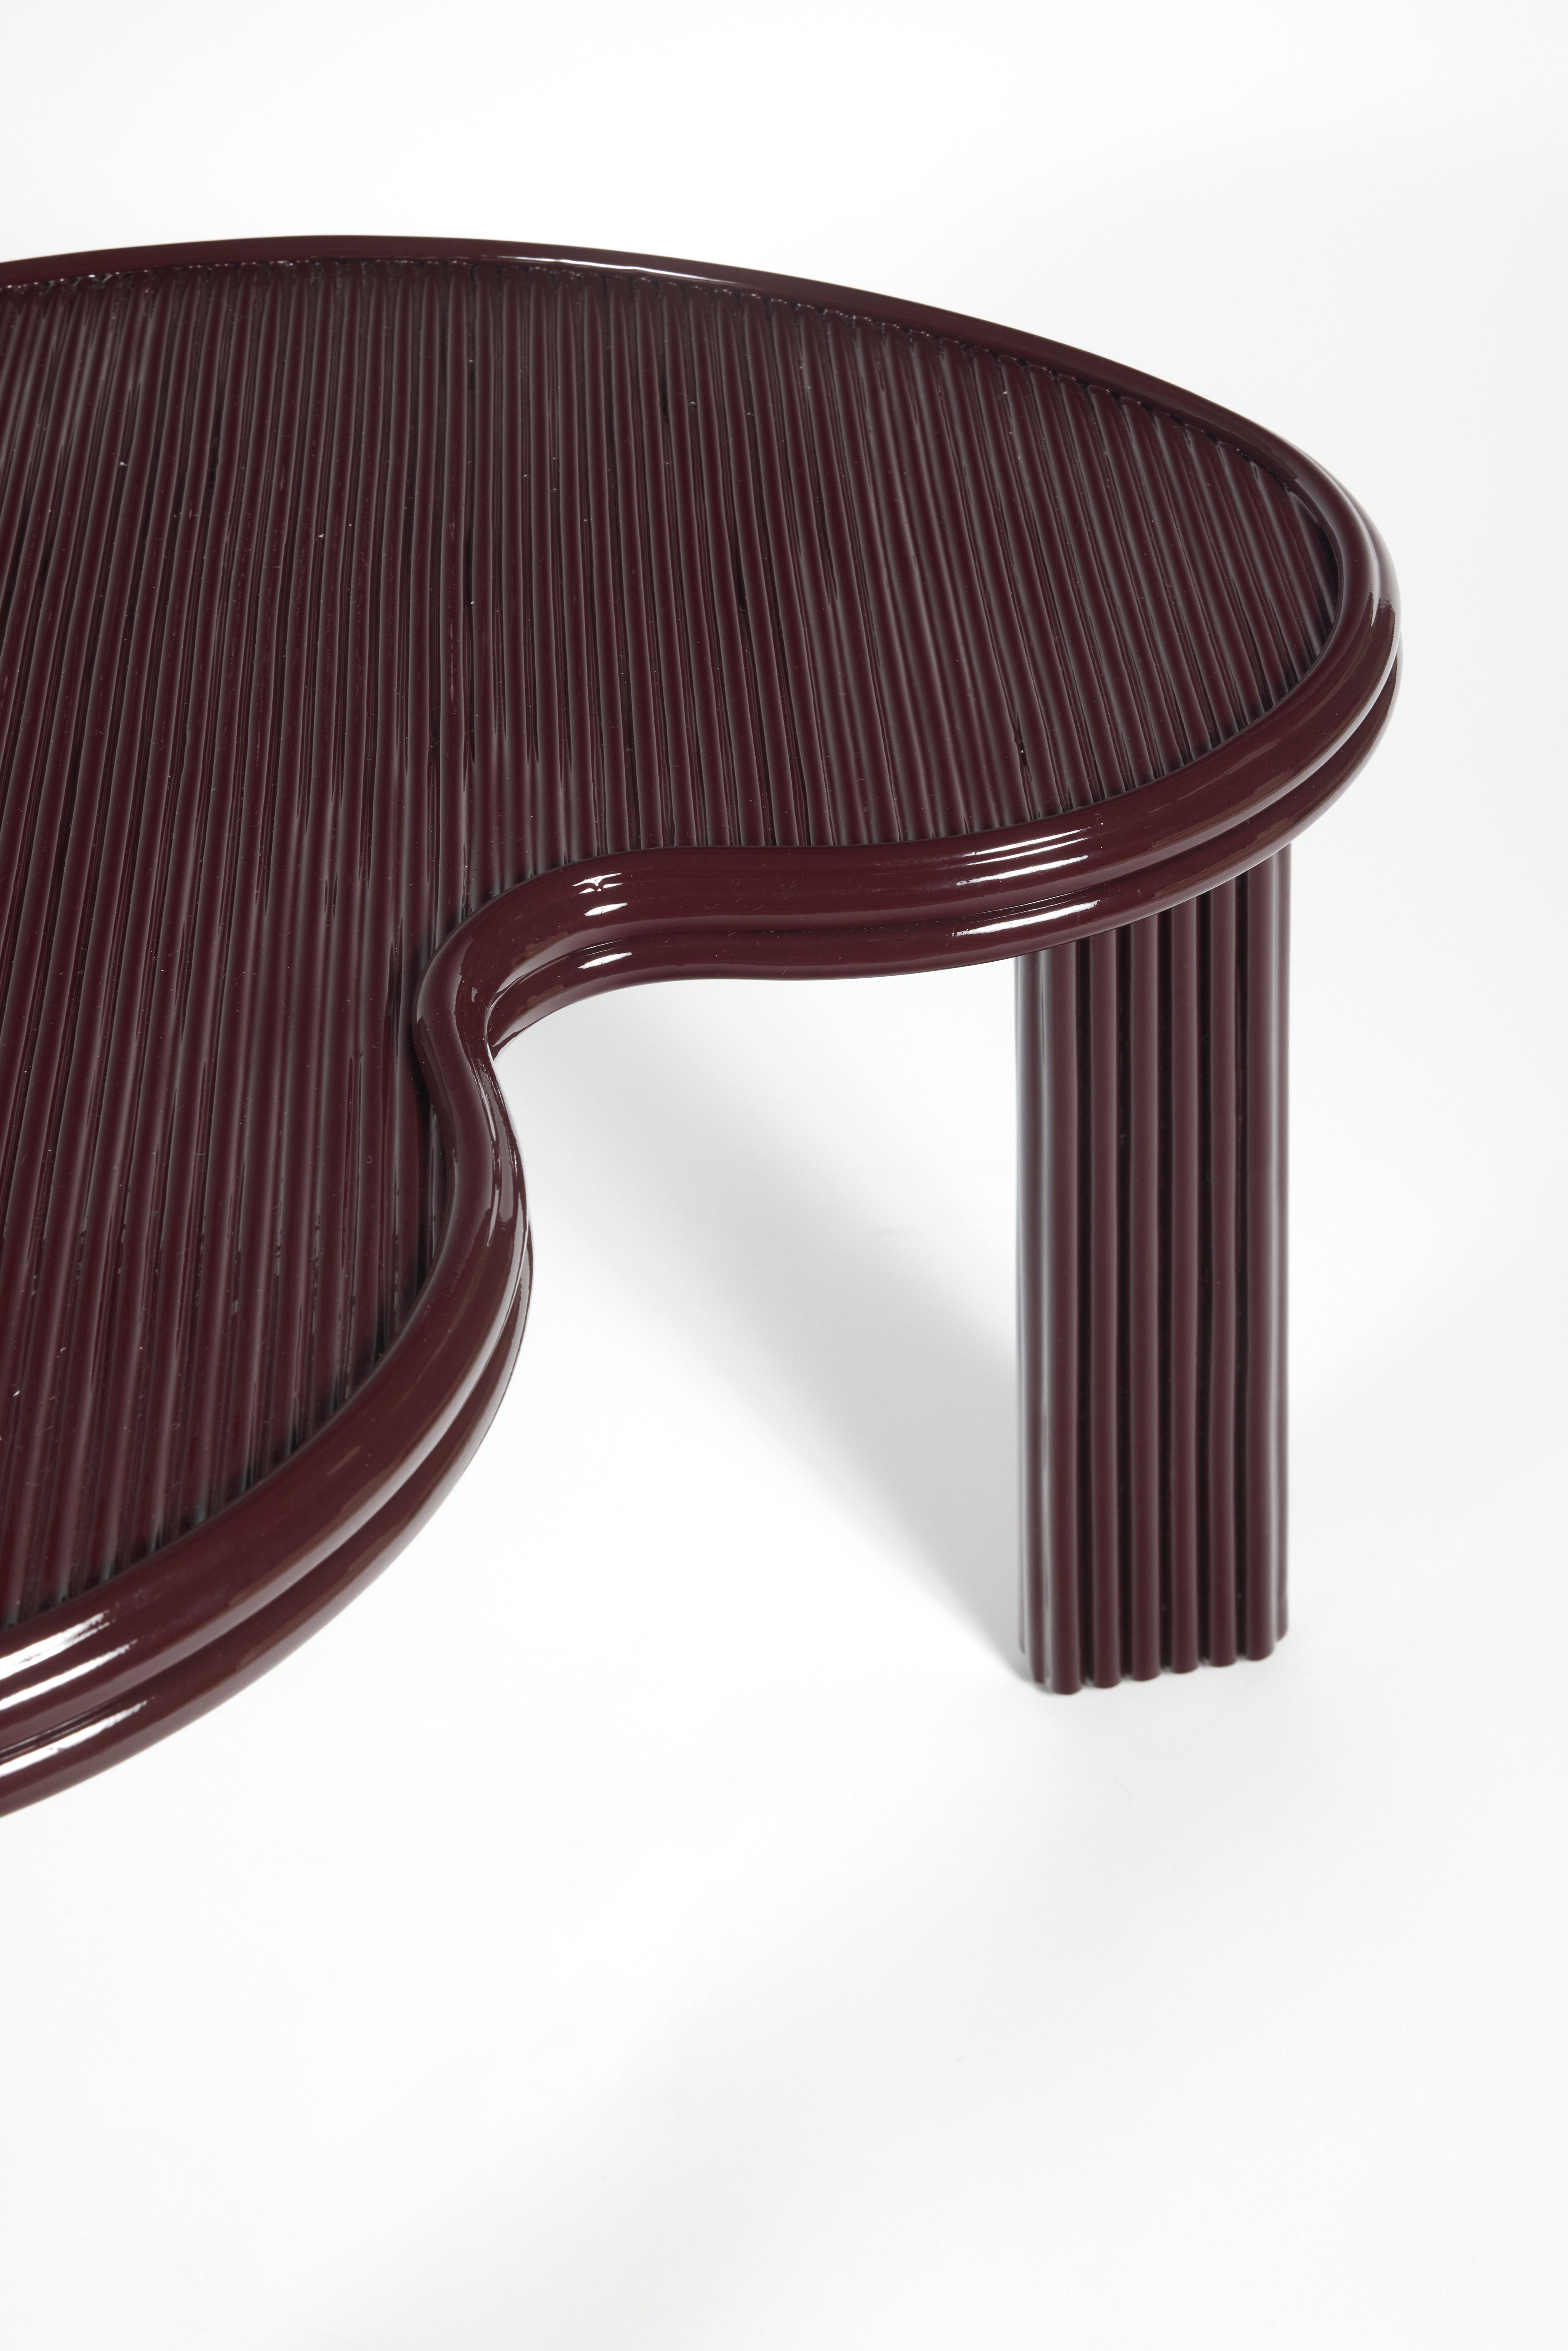 European Primavera N°2 Purple Lacquered Rattan Side Table Designed By Chloé Nègre For Sale